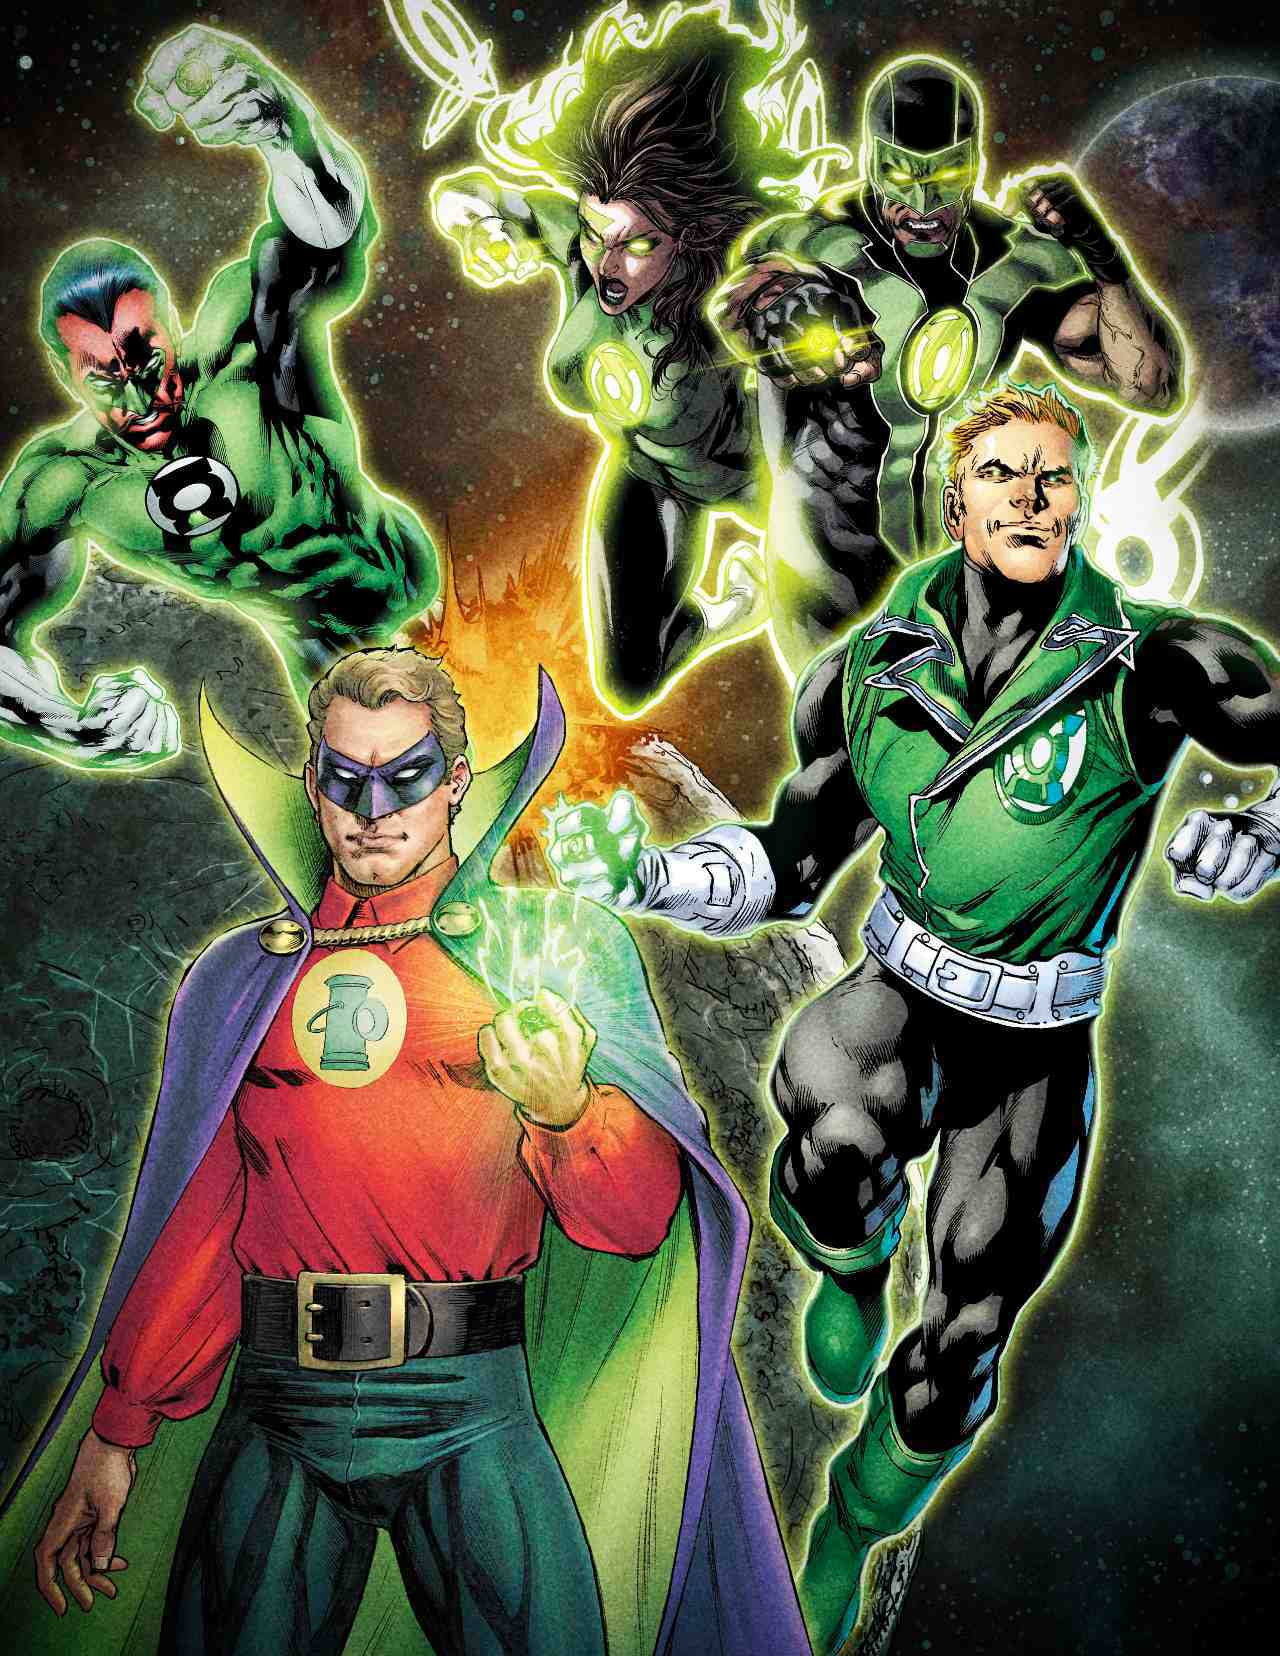 Green Lantern HBO Max Series To Focus On Guy Gardner, Jessica Cruz, Simon  Baz, Alan Scott, Kilowog, and Sinestro | Geek Culture